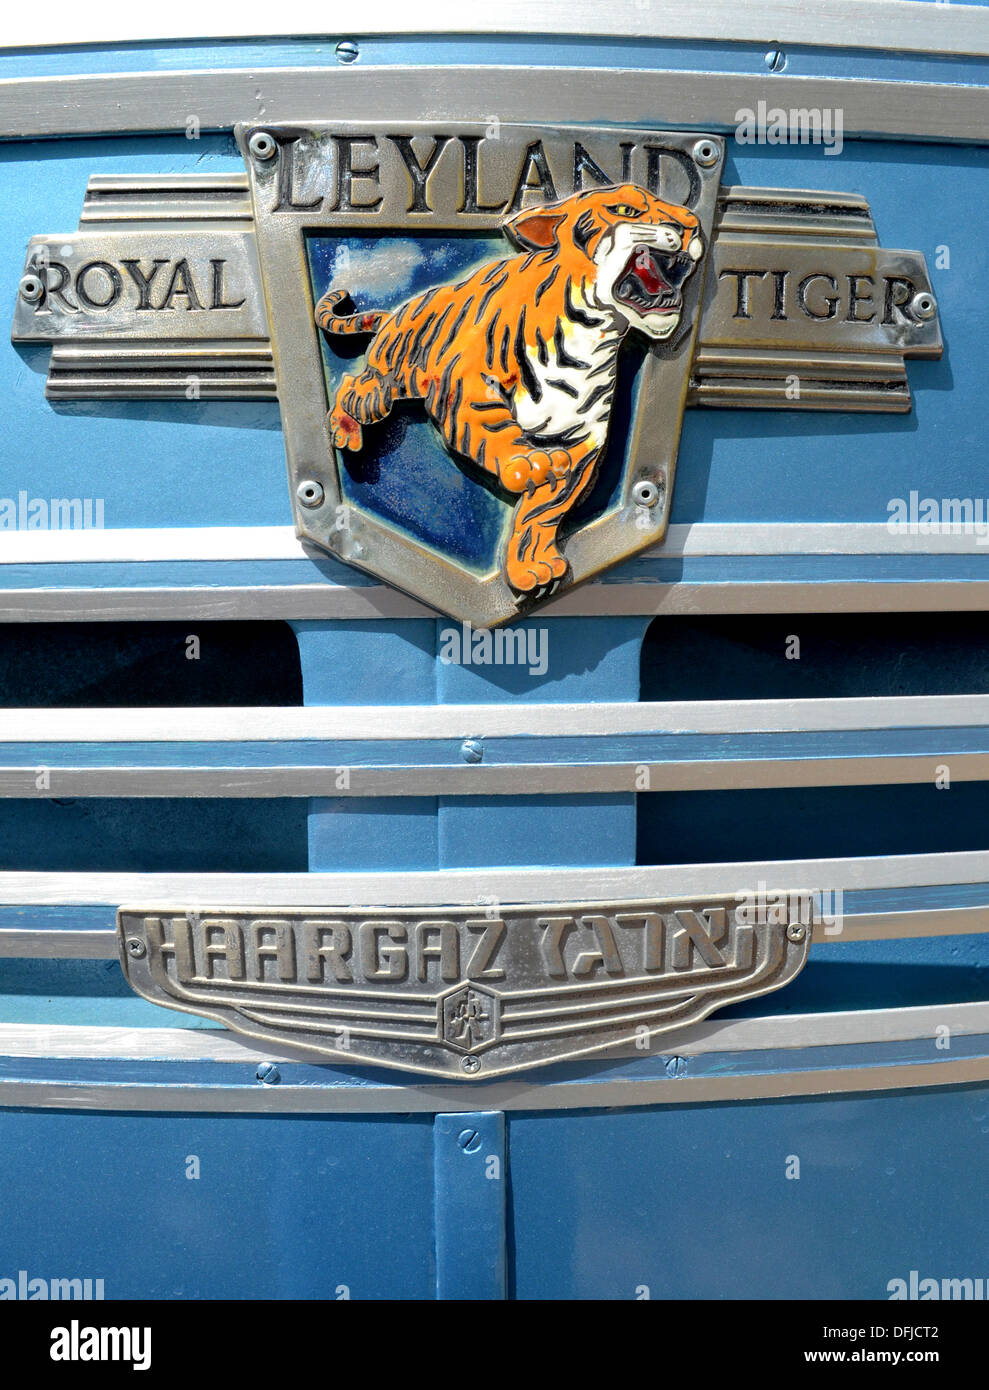 Leyland tiger, Classic Car Logo Stock Photo